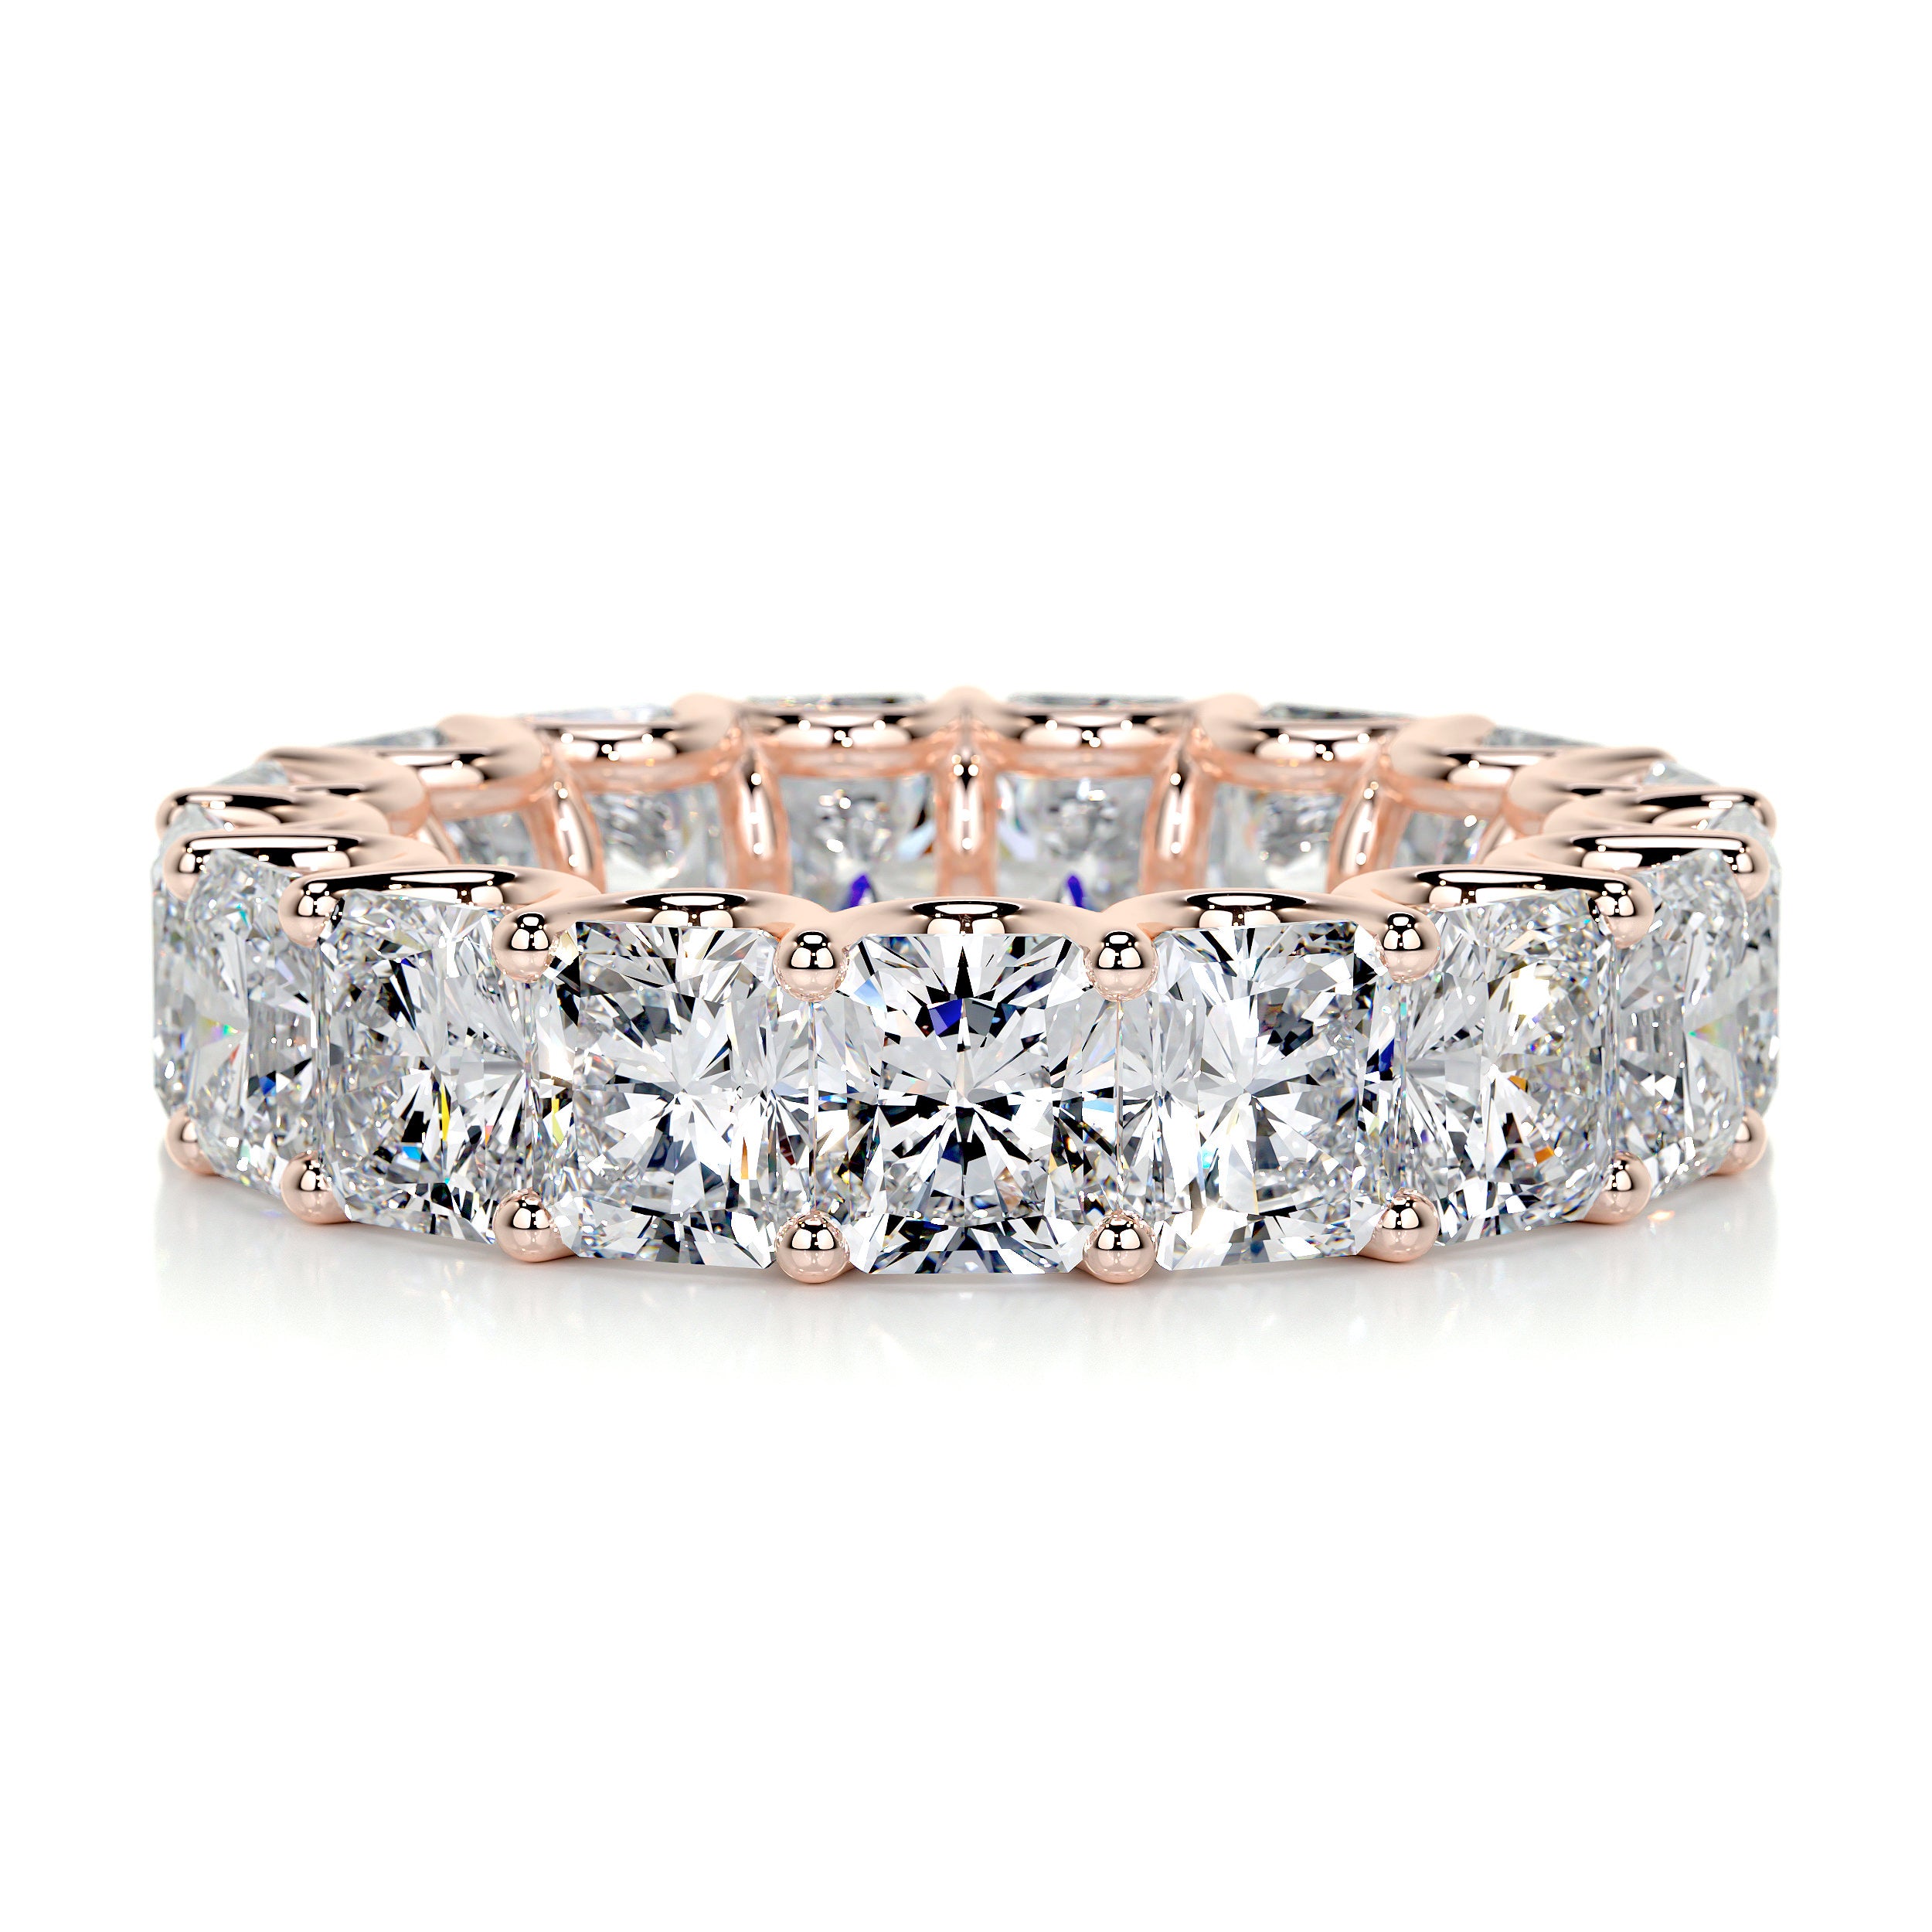 Andi Eternity Wedding Ring   (5 Carat) - 14K Rose Gold